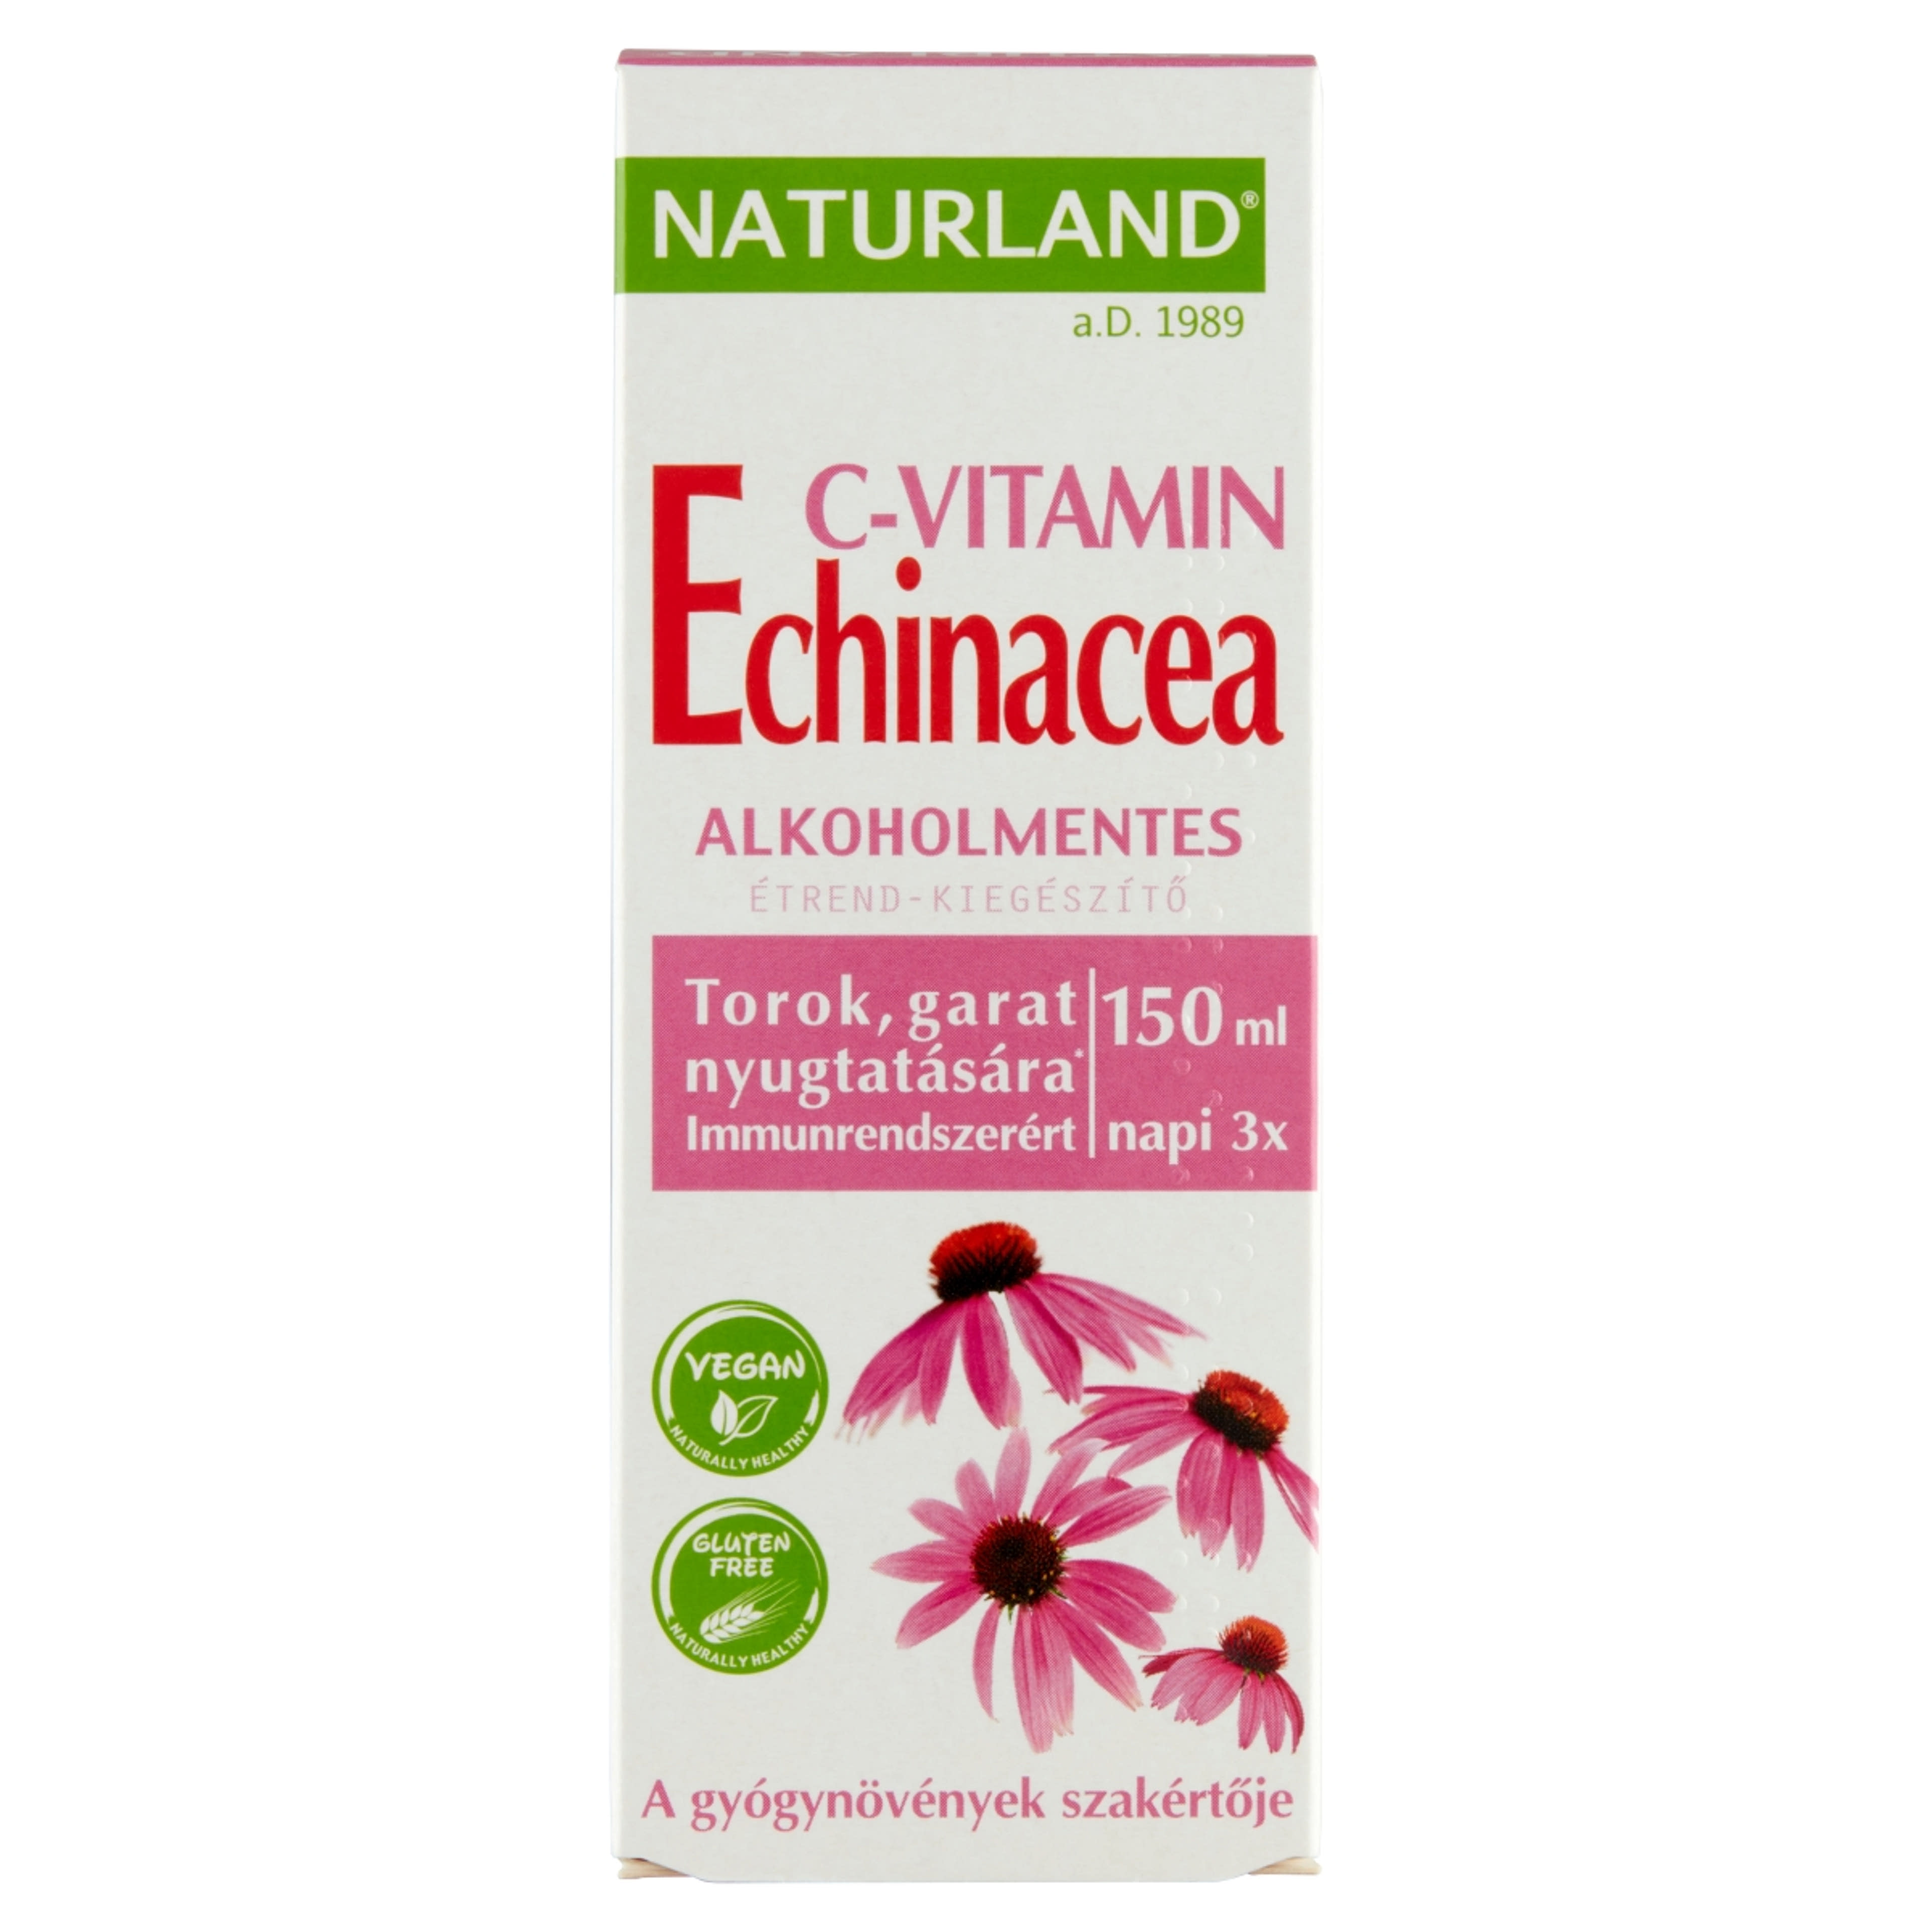 Naturland NL Echinacea +C-Vitamin - 150 ml